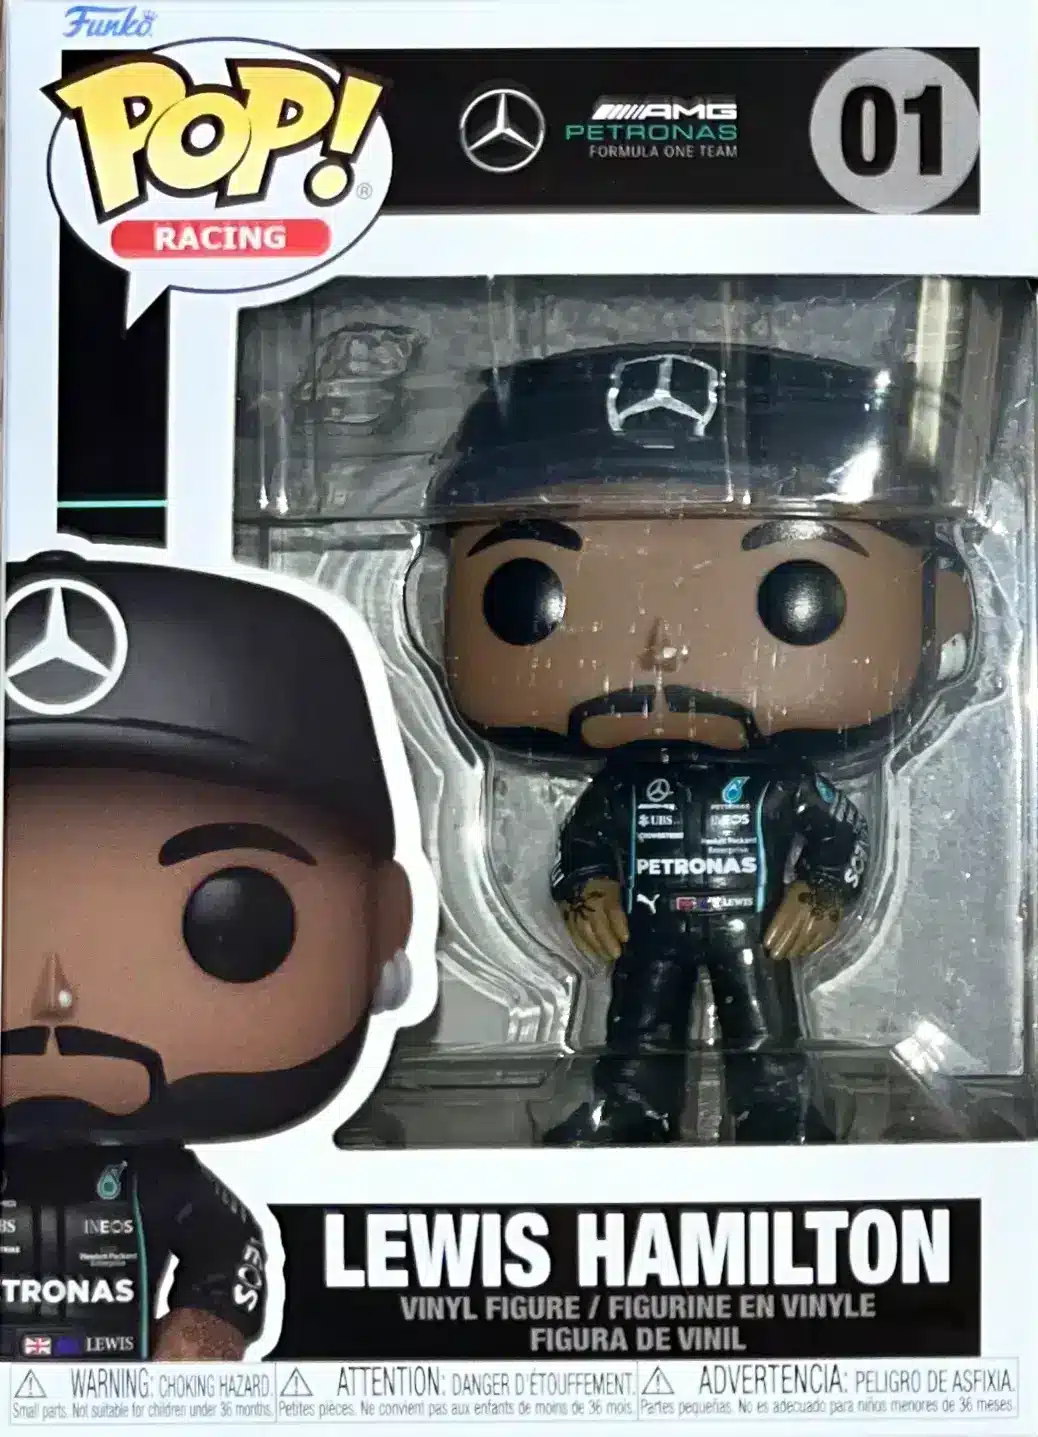 Funko Pop! Racing: Lewis Hamilton